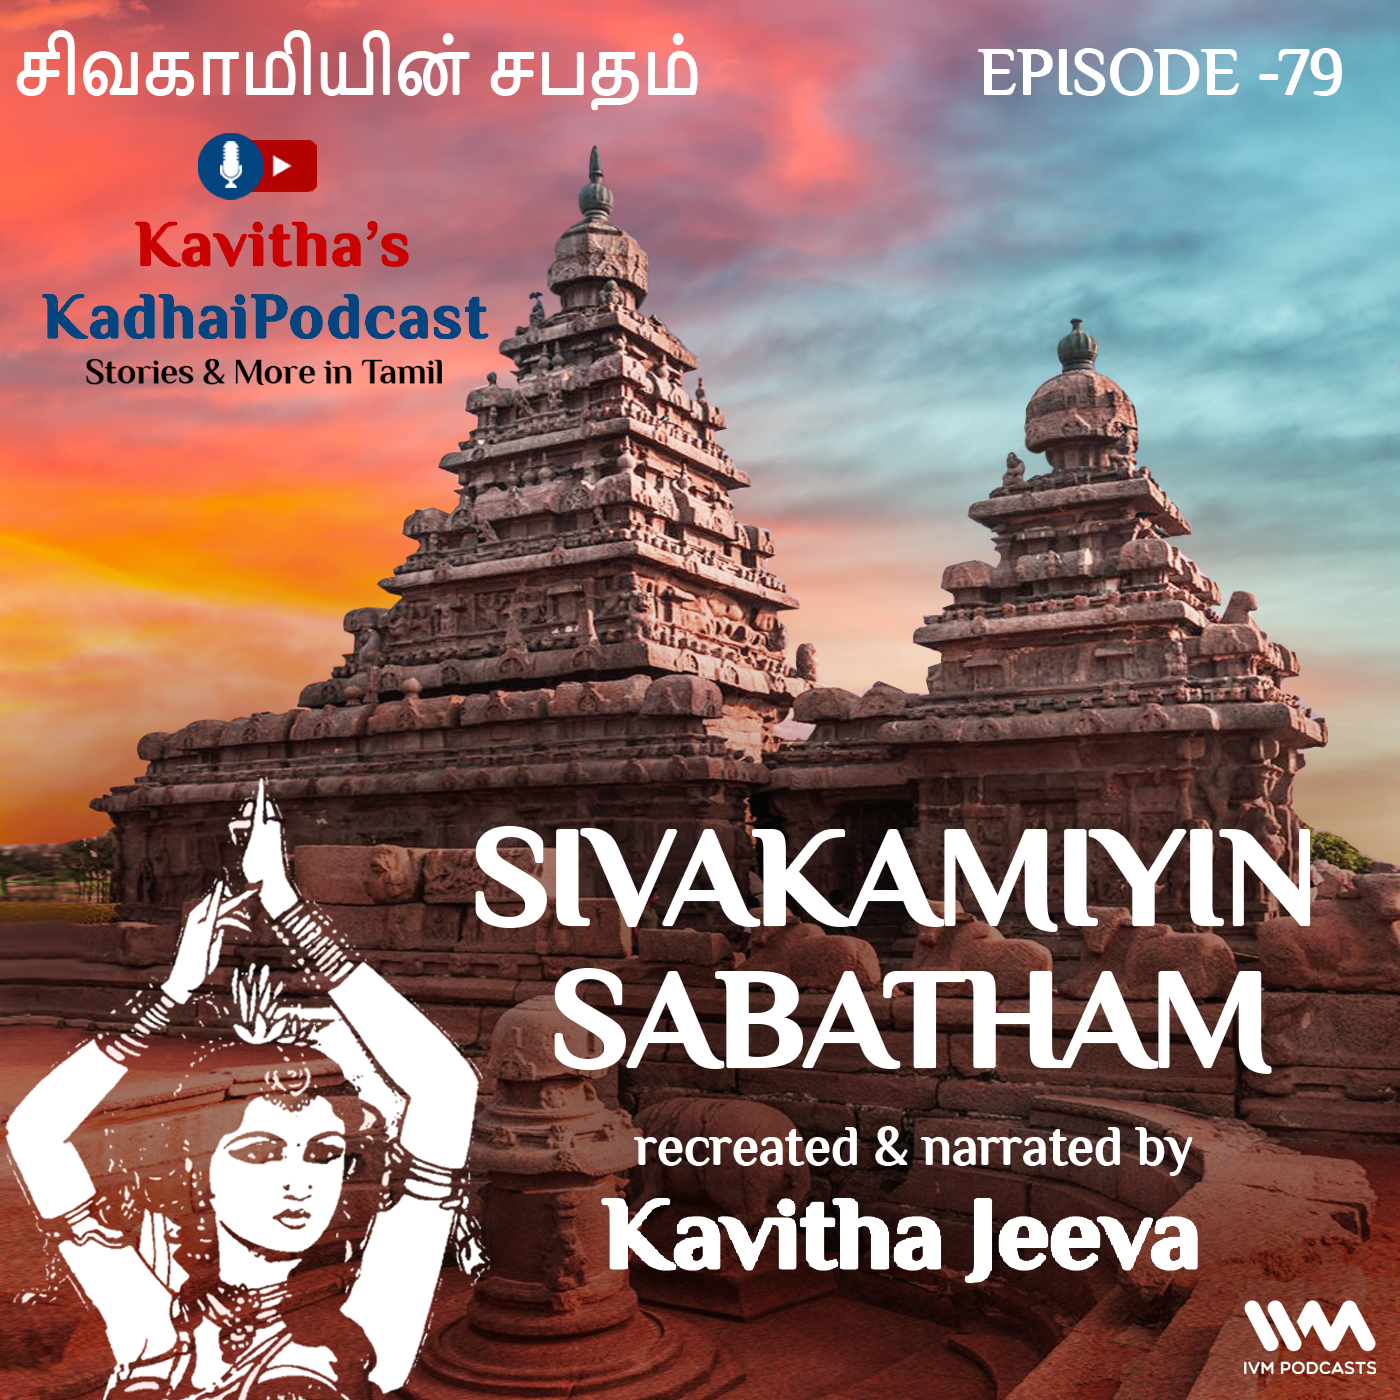 KadhaiPodcast's Sivakamiyin Sabatham - Episode # 79